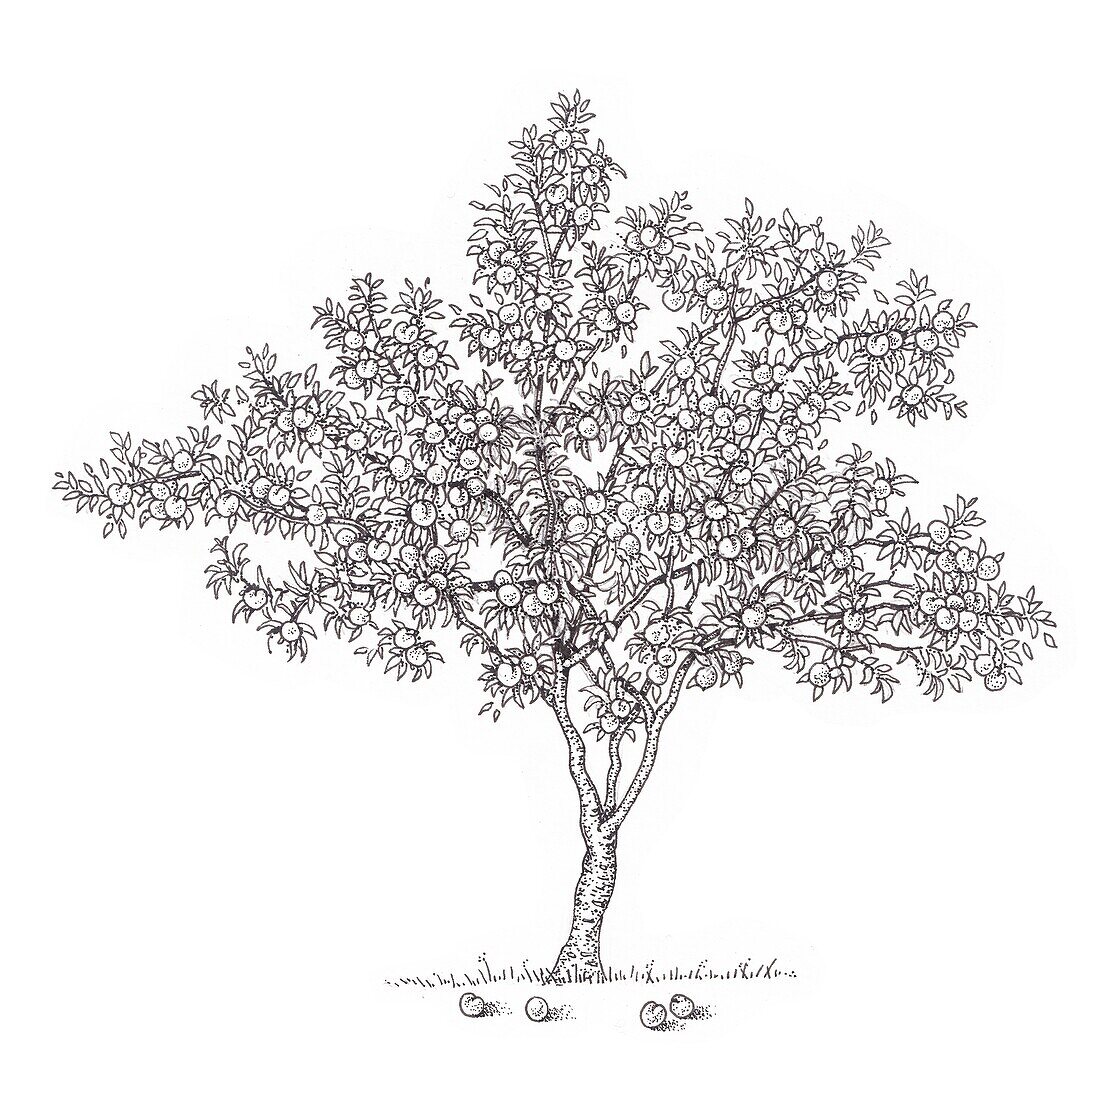 Peach (Prunus persica) tree, illustration